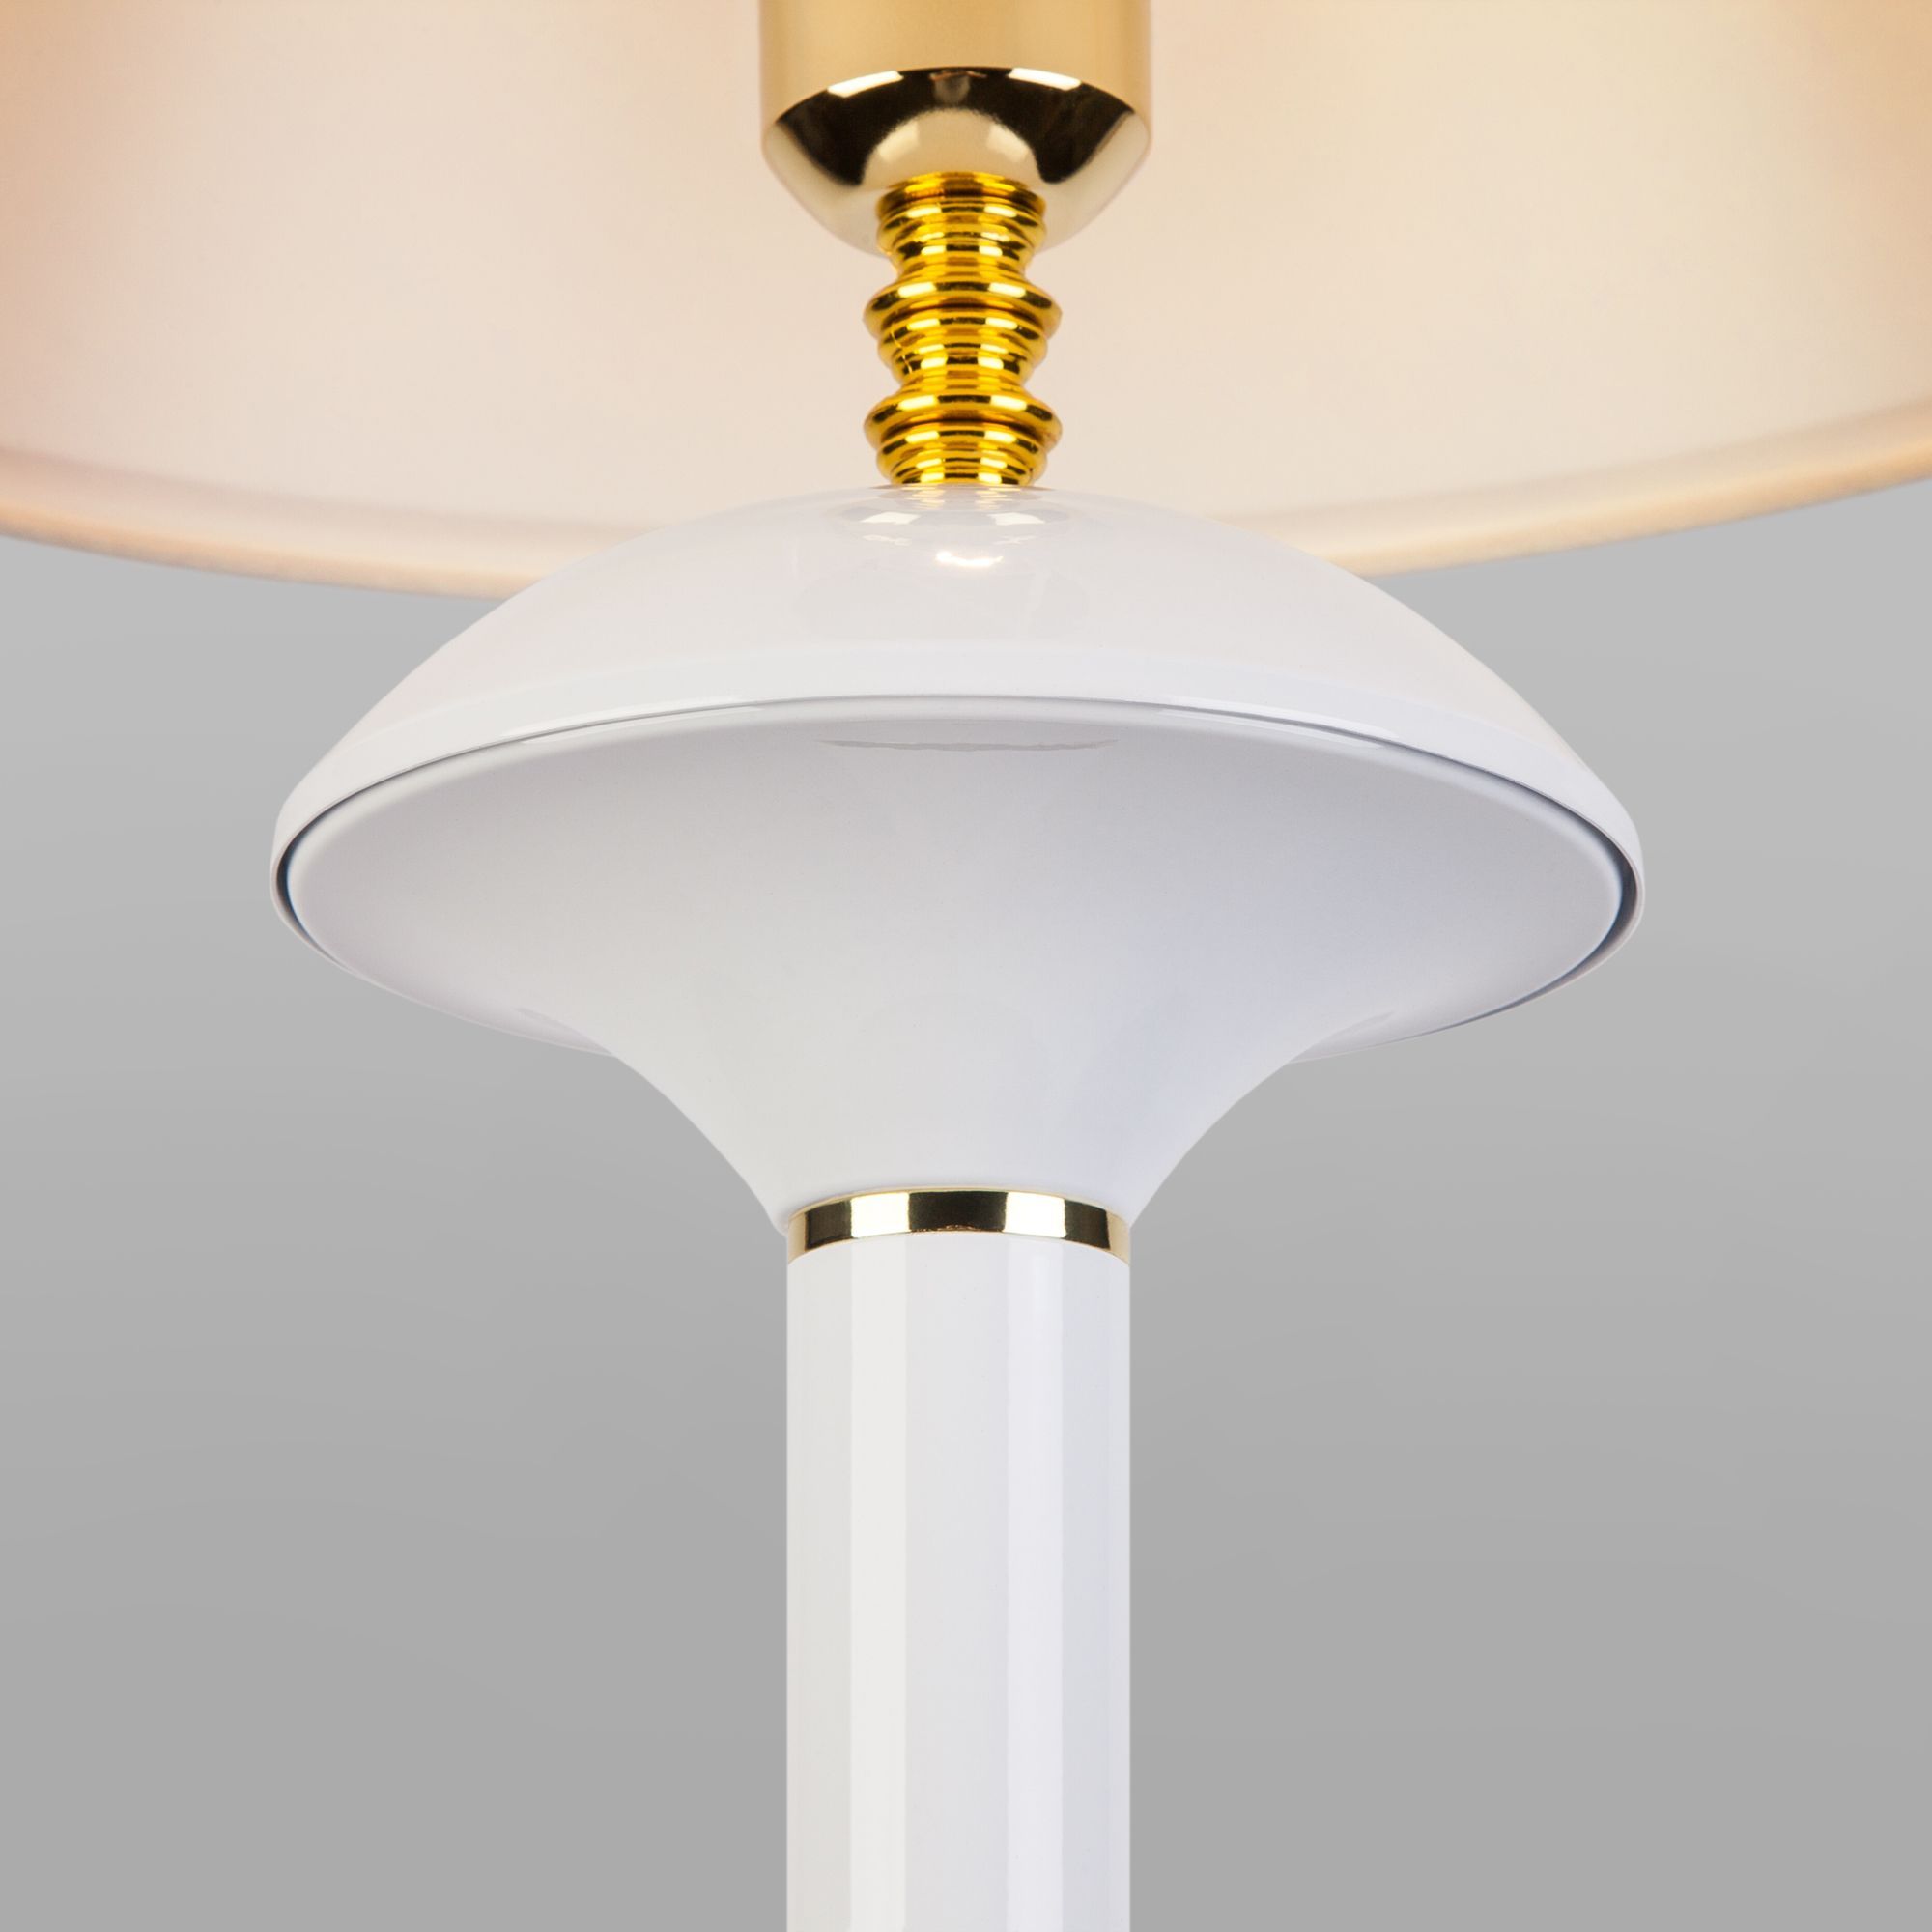 Напольный светильник с абажуром Eurosvet Lorenzo 01086/1 глянцевый белый. Фото 5